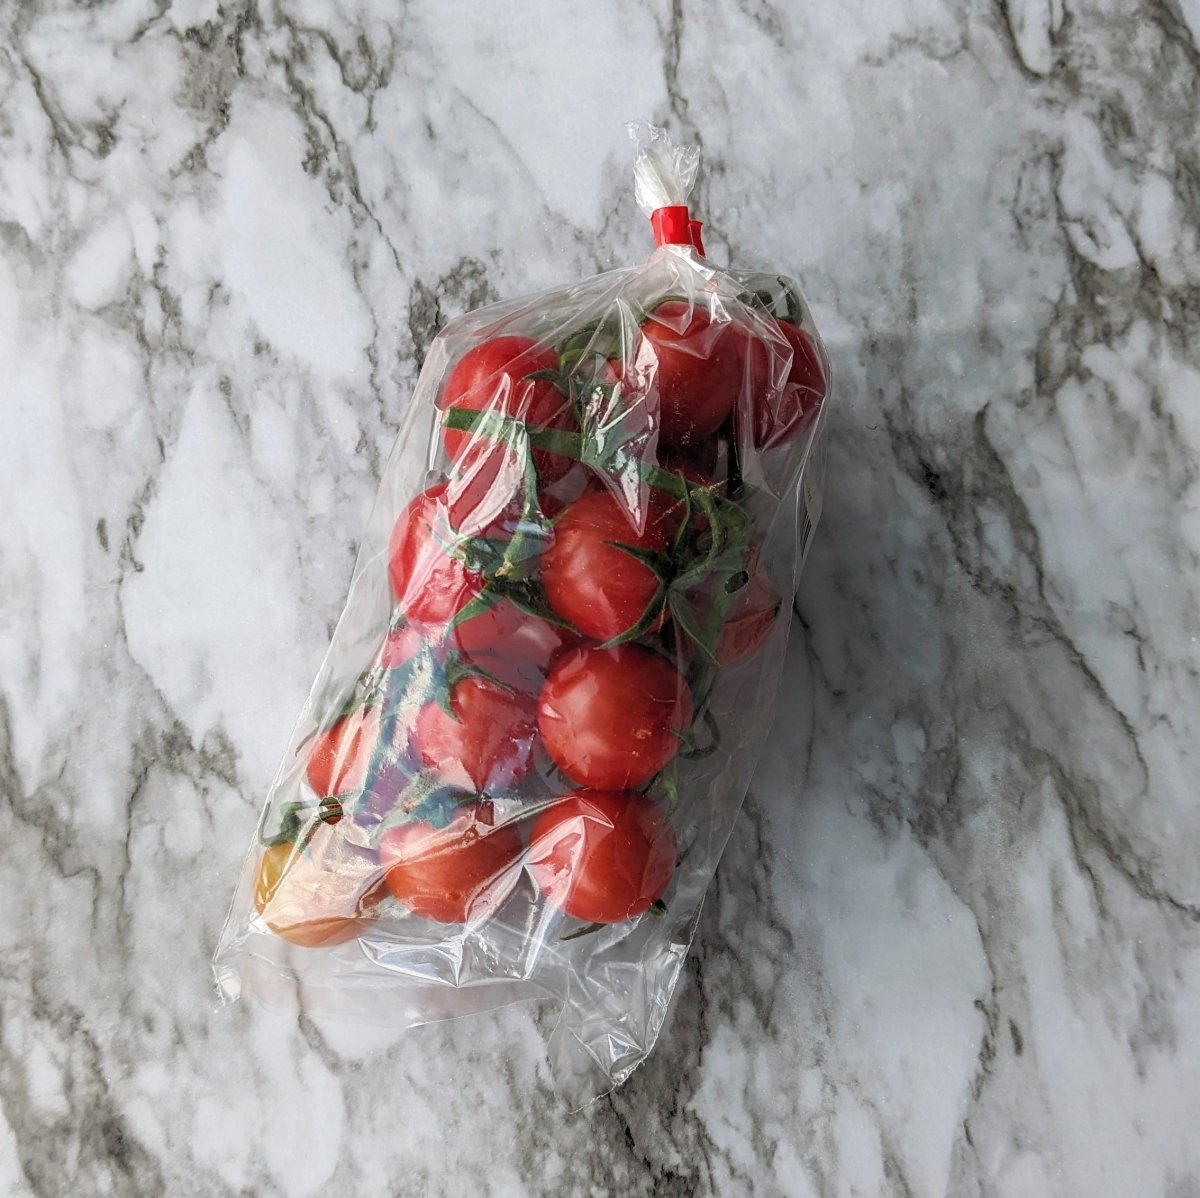 Cherry Tomatoes (On The Vine) - 1 Pint Edmonton | Forage Farmers Market